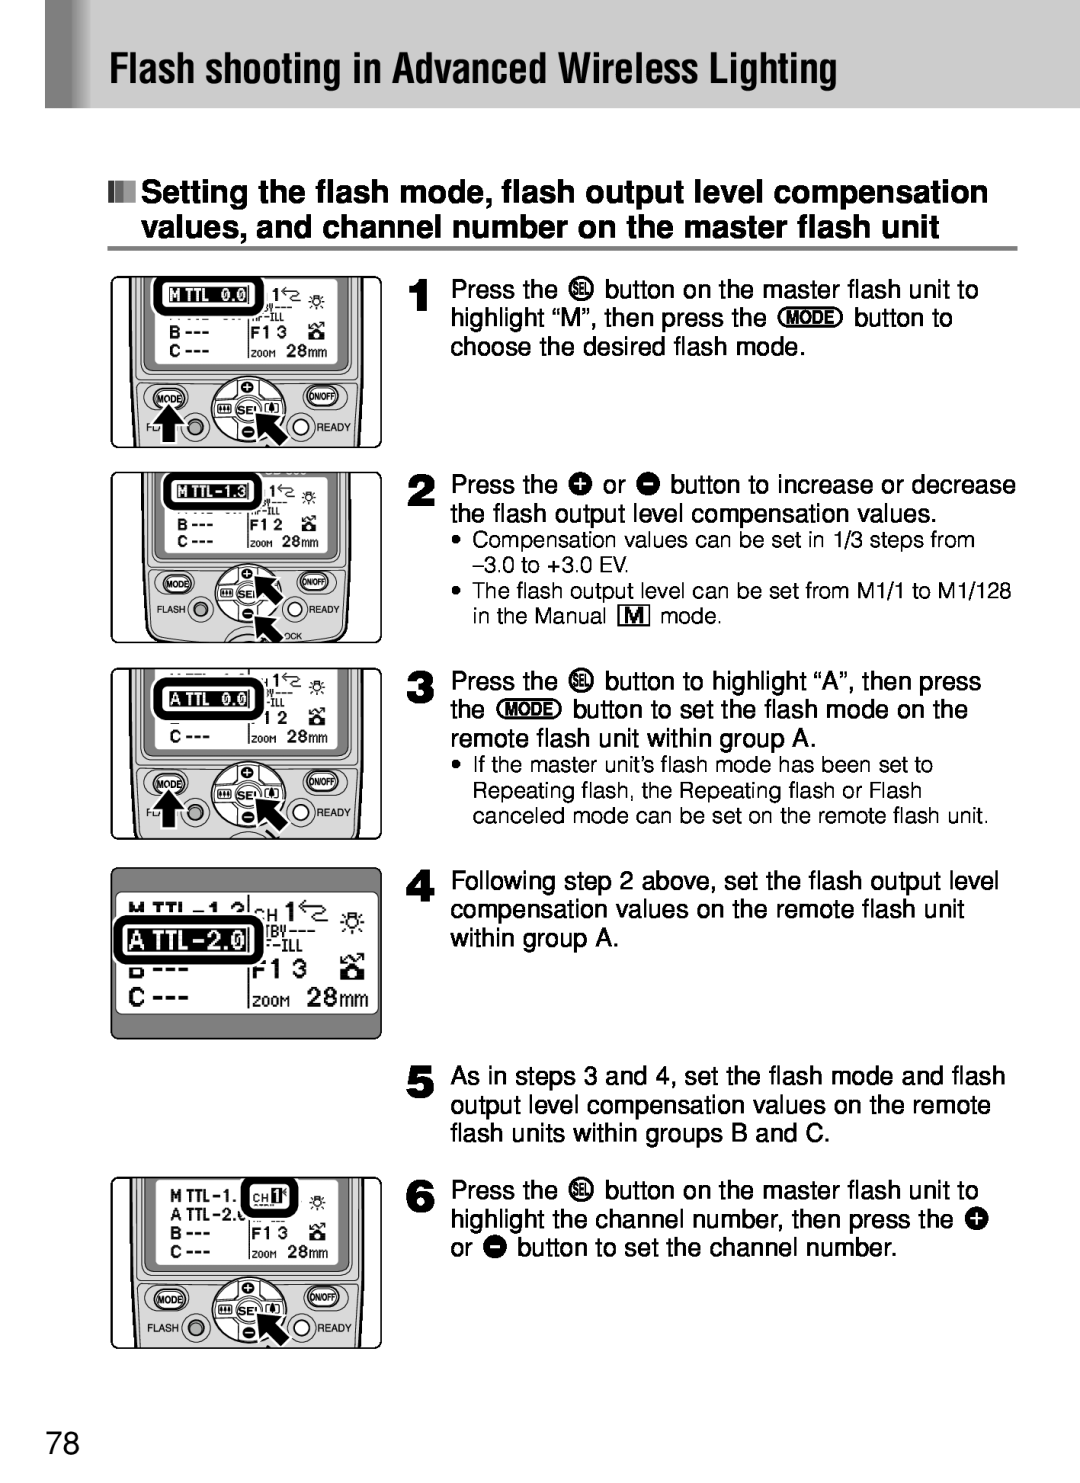 Nikon SB-800 instruction manual Flash shooting in Advanced Wireless Lighting 